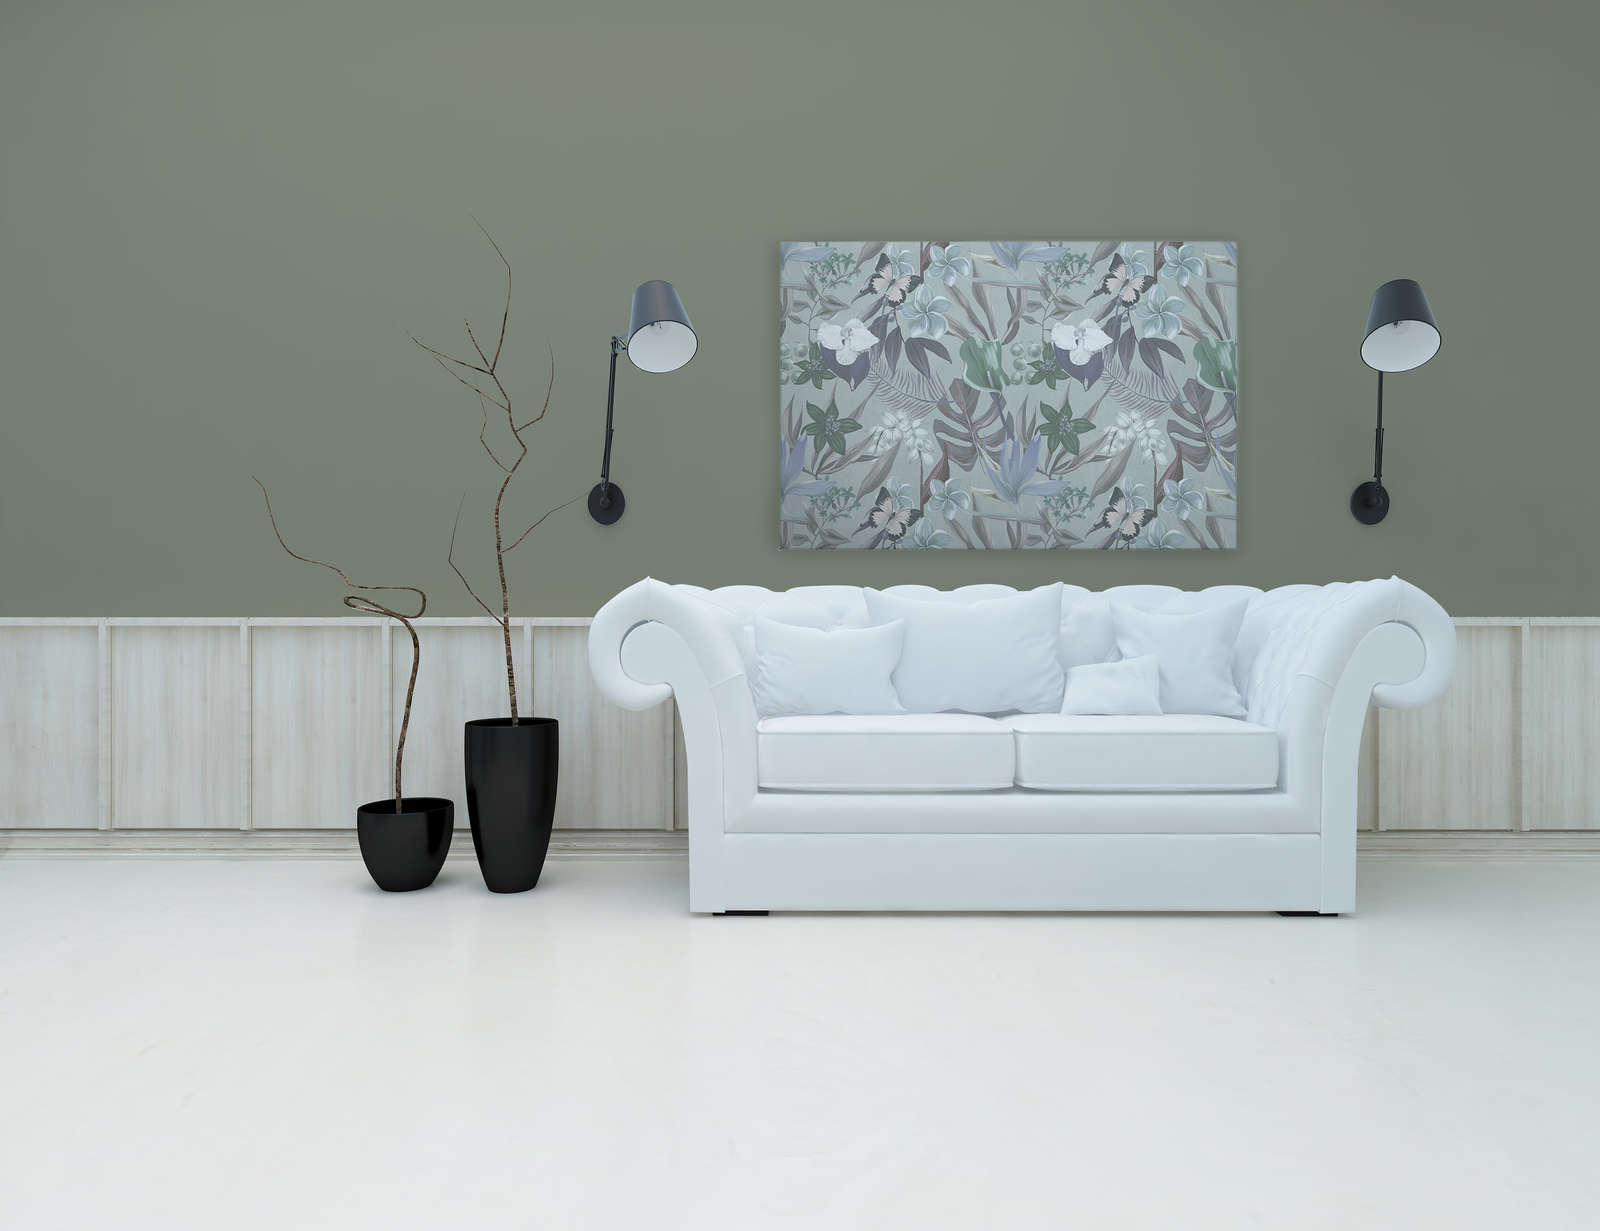             Lienzo Jungla Floral Pintura dibujada | verde, blanco - 1,20 m x 0,80 m
        